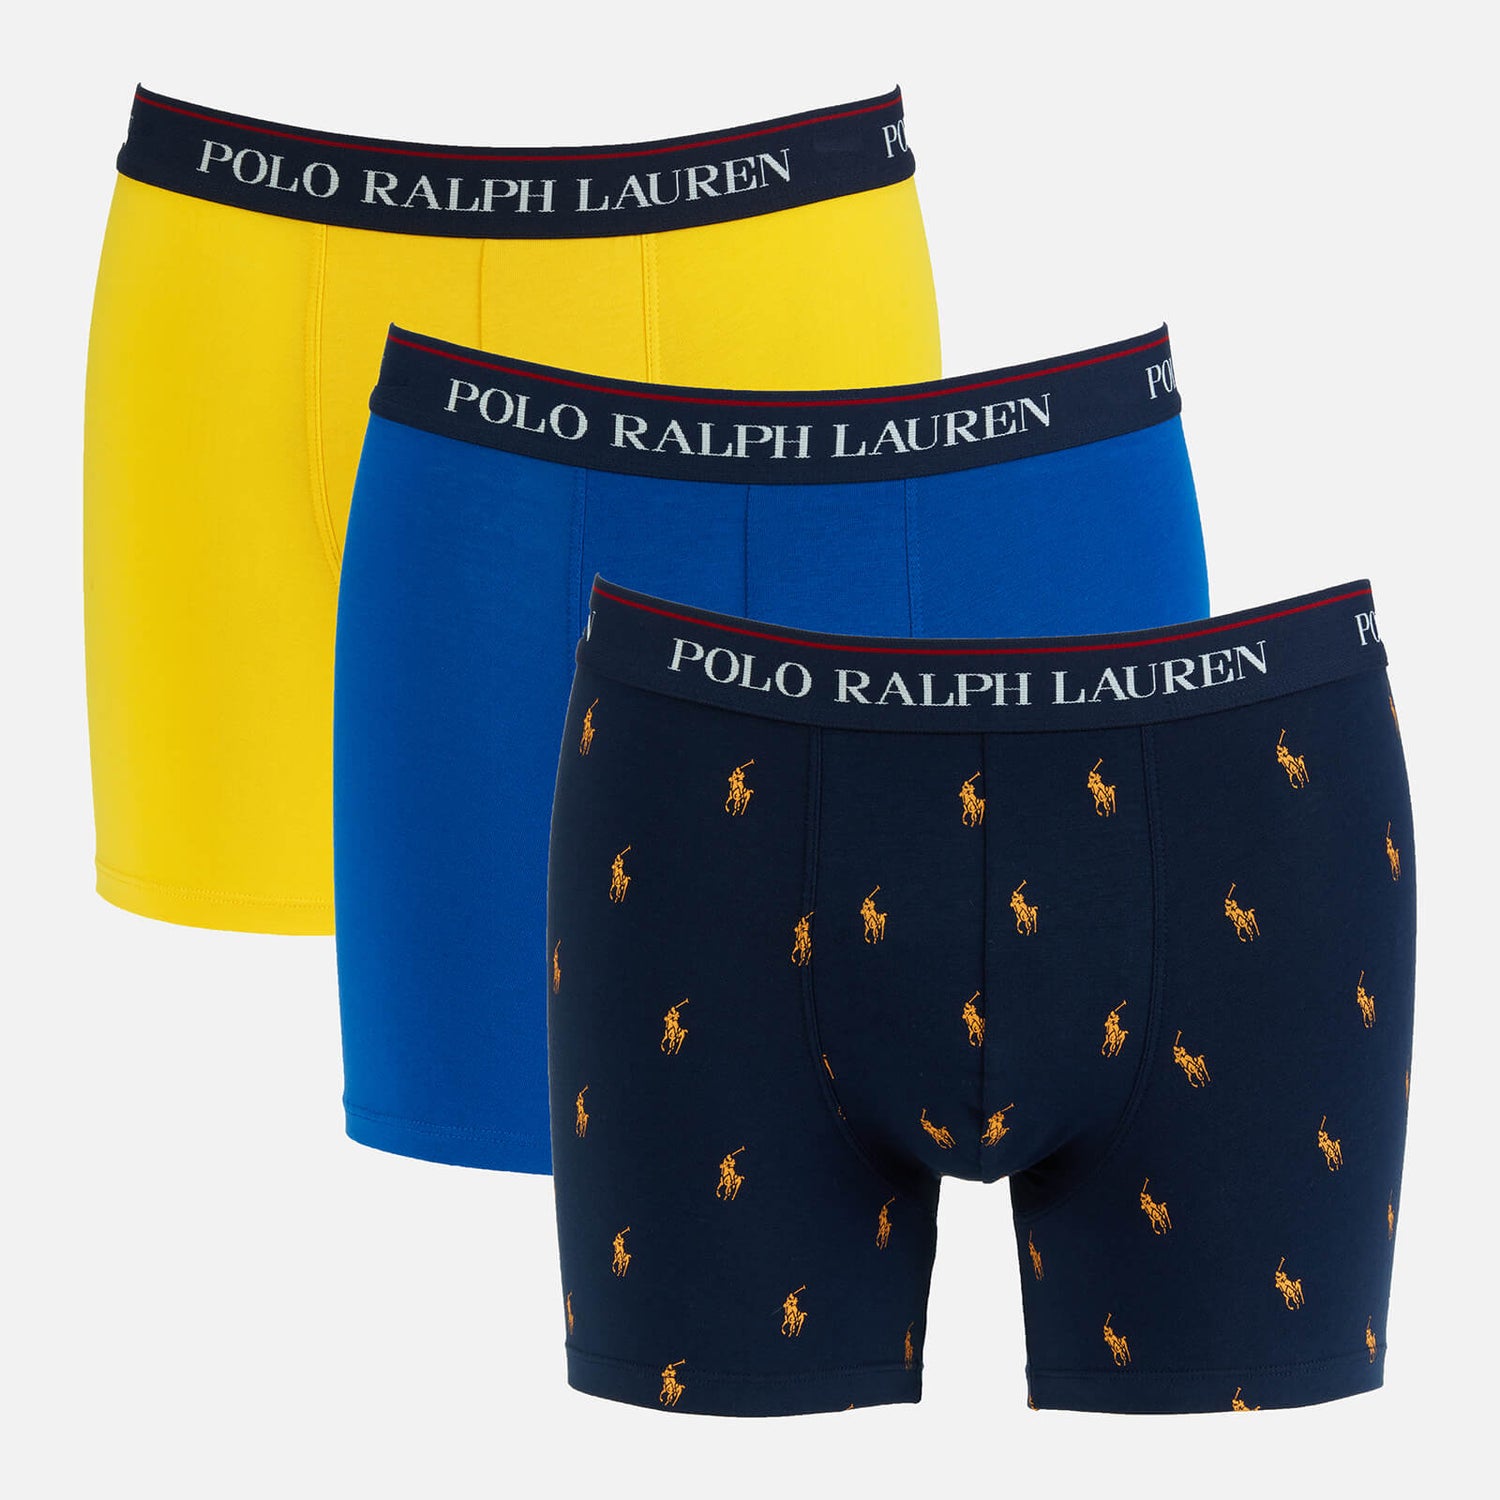 Polo Ralph Lauren Men's 3-Pack Boxer Briefs - Royal/Navy AOP/Yellow